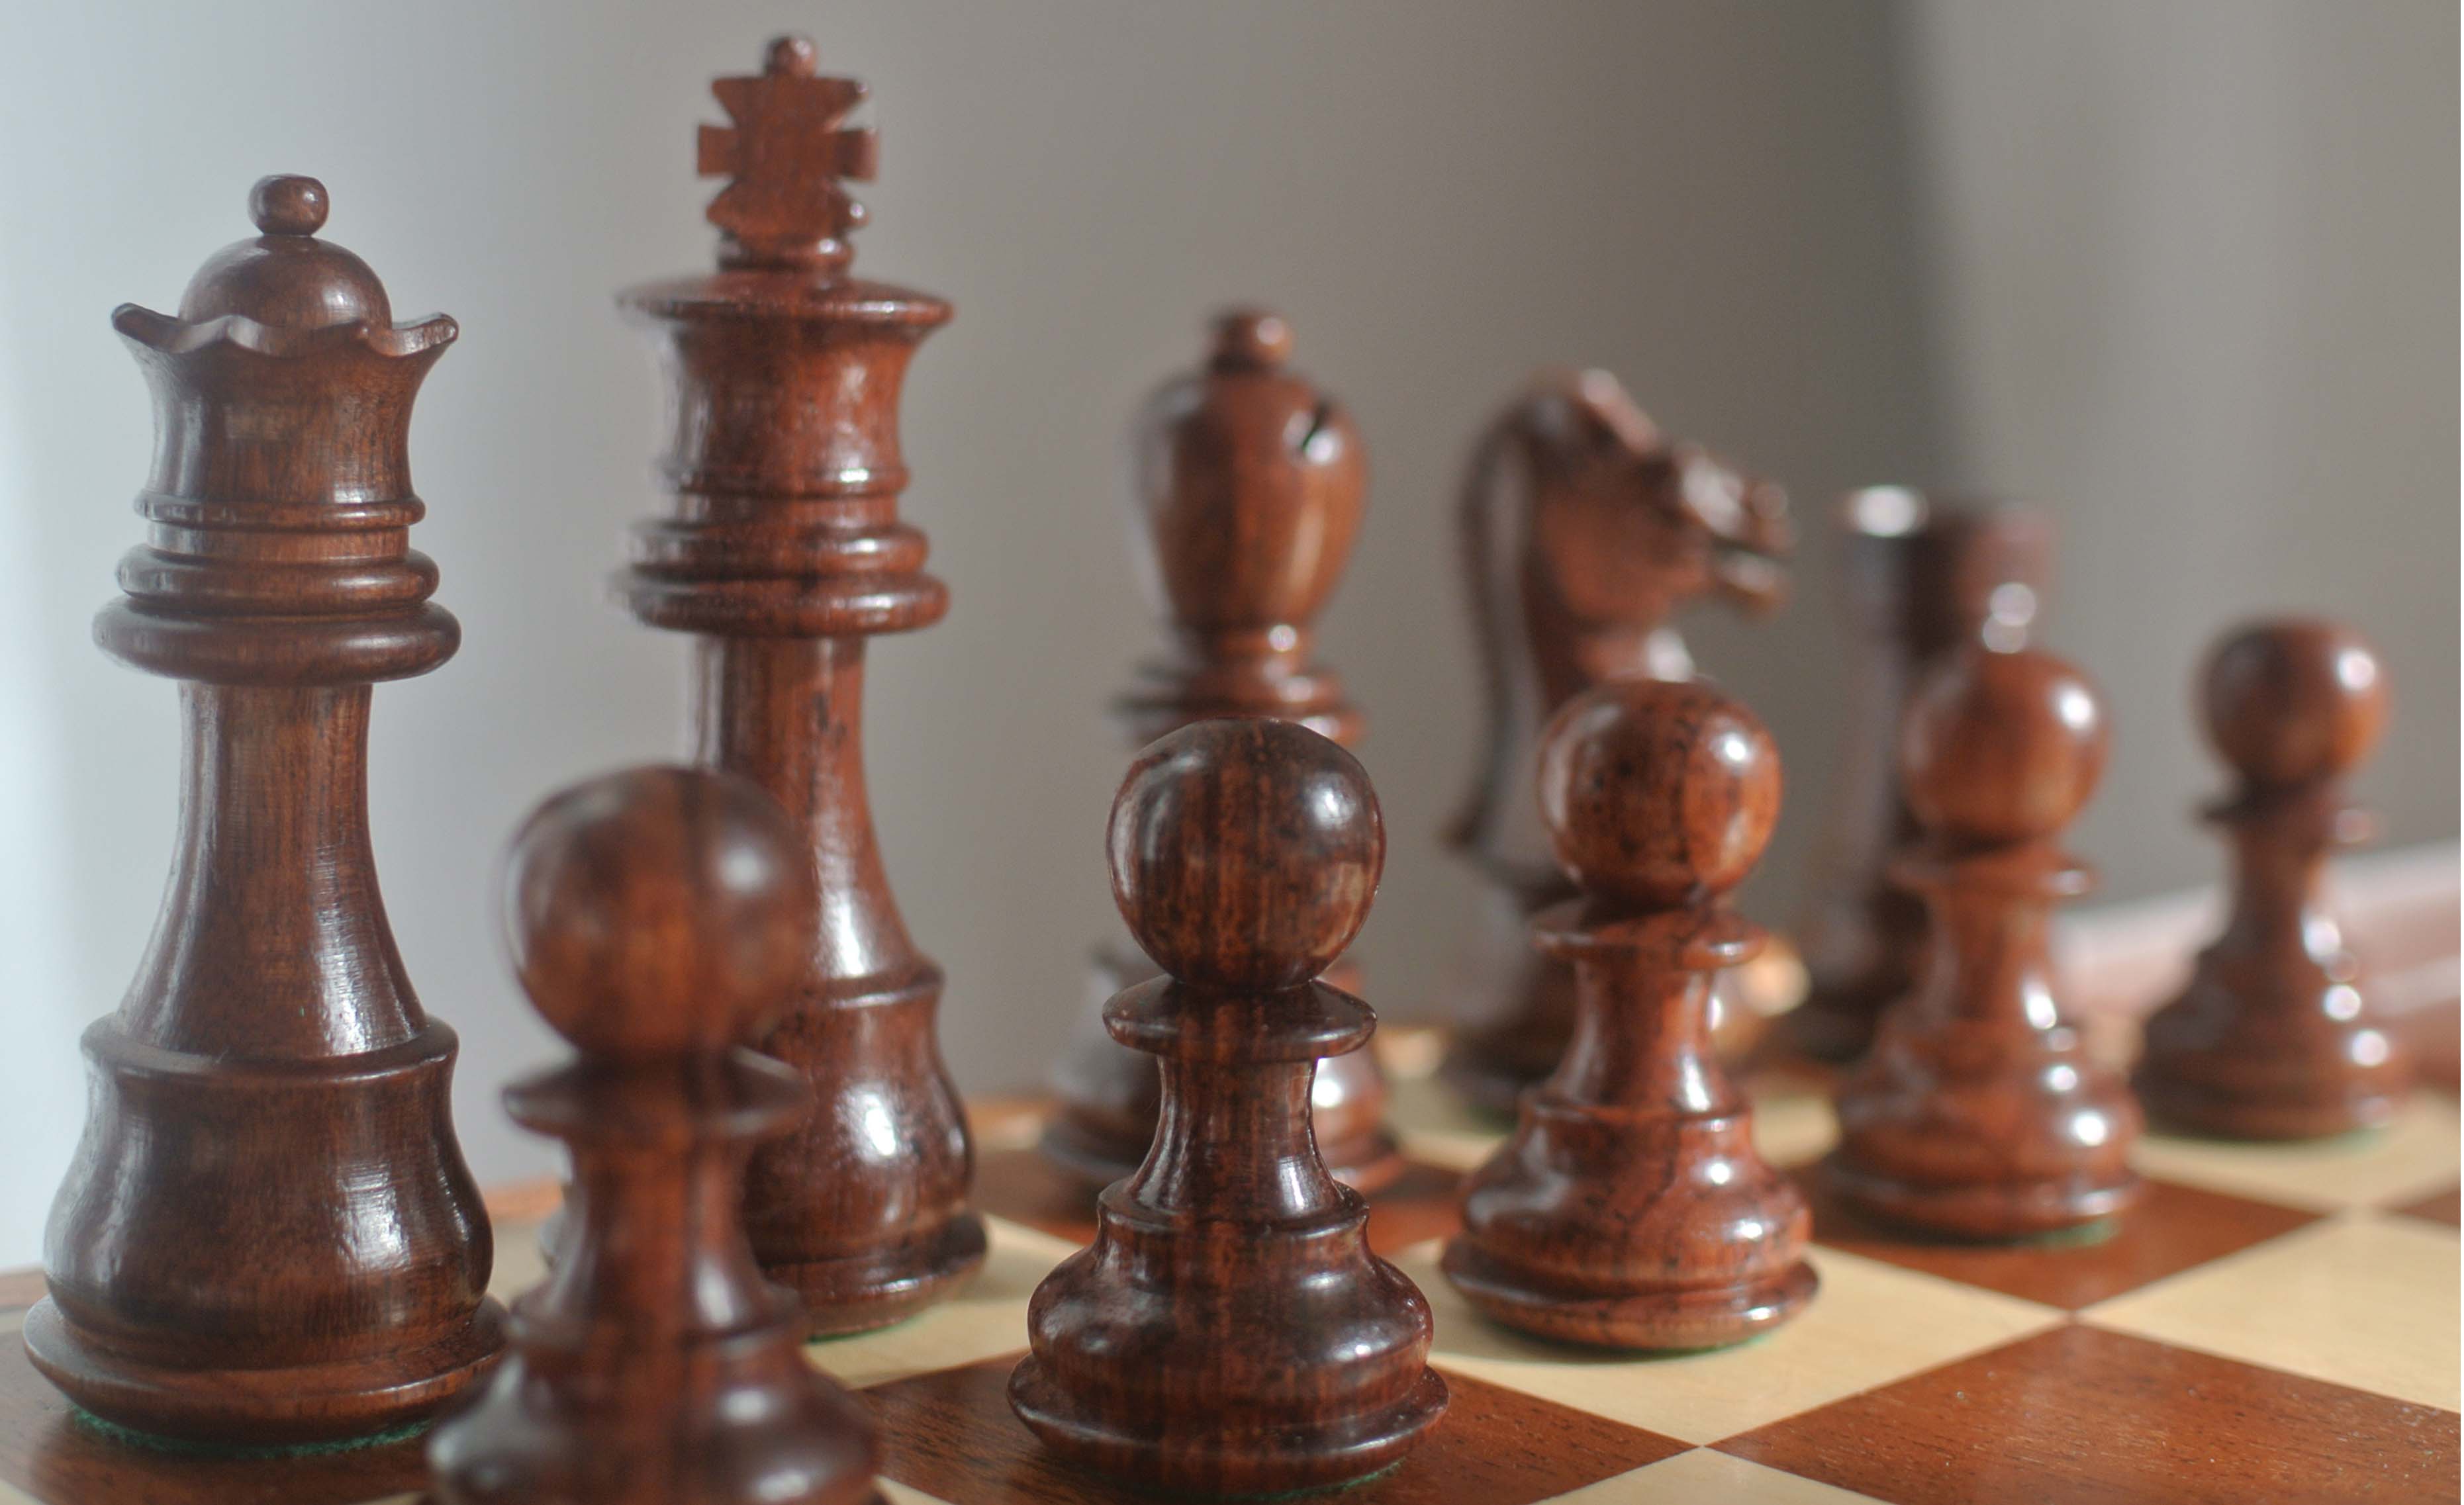 
Best Wooden Chess Set
